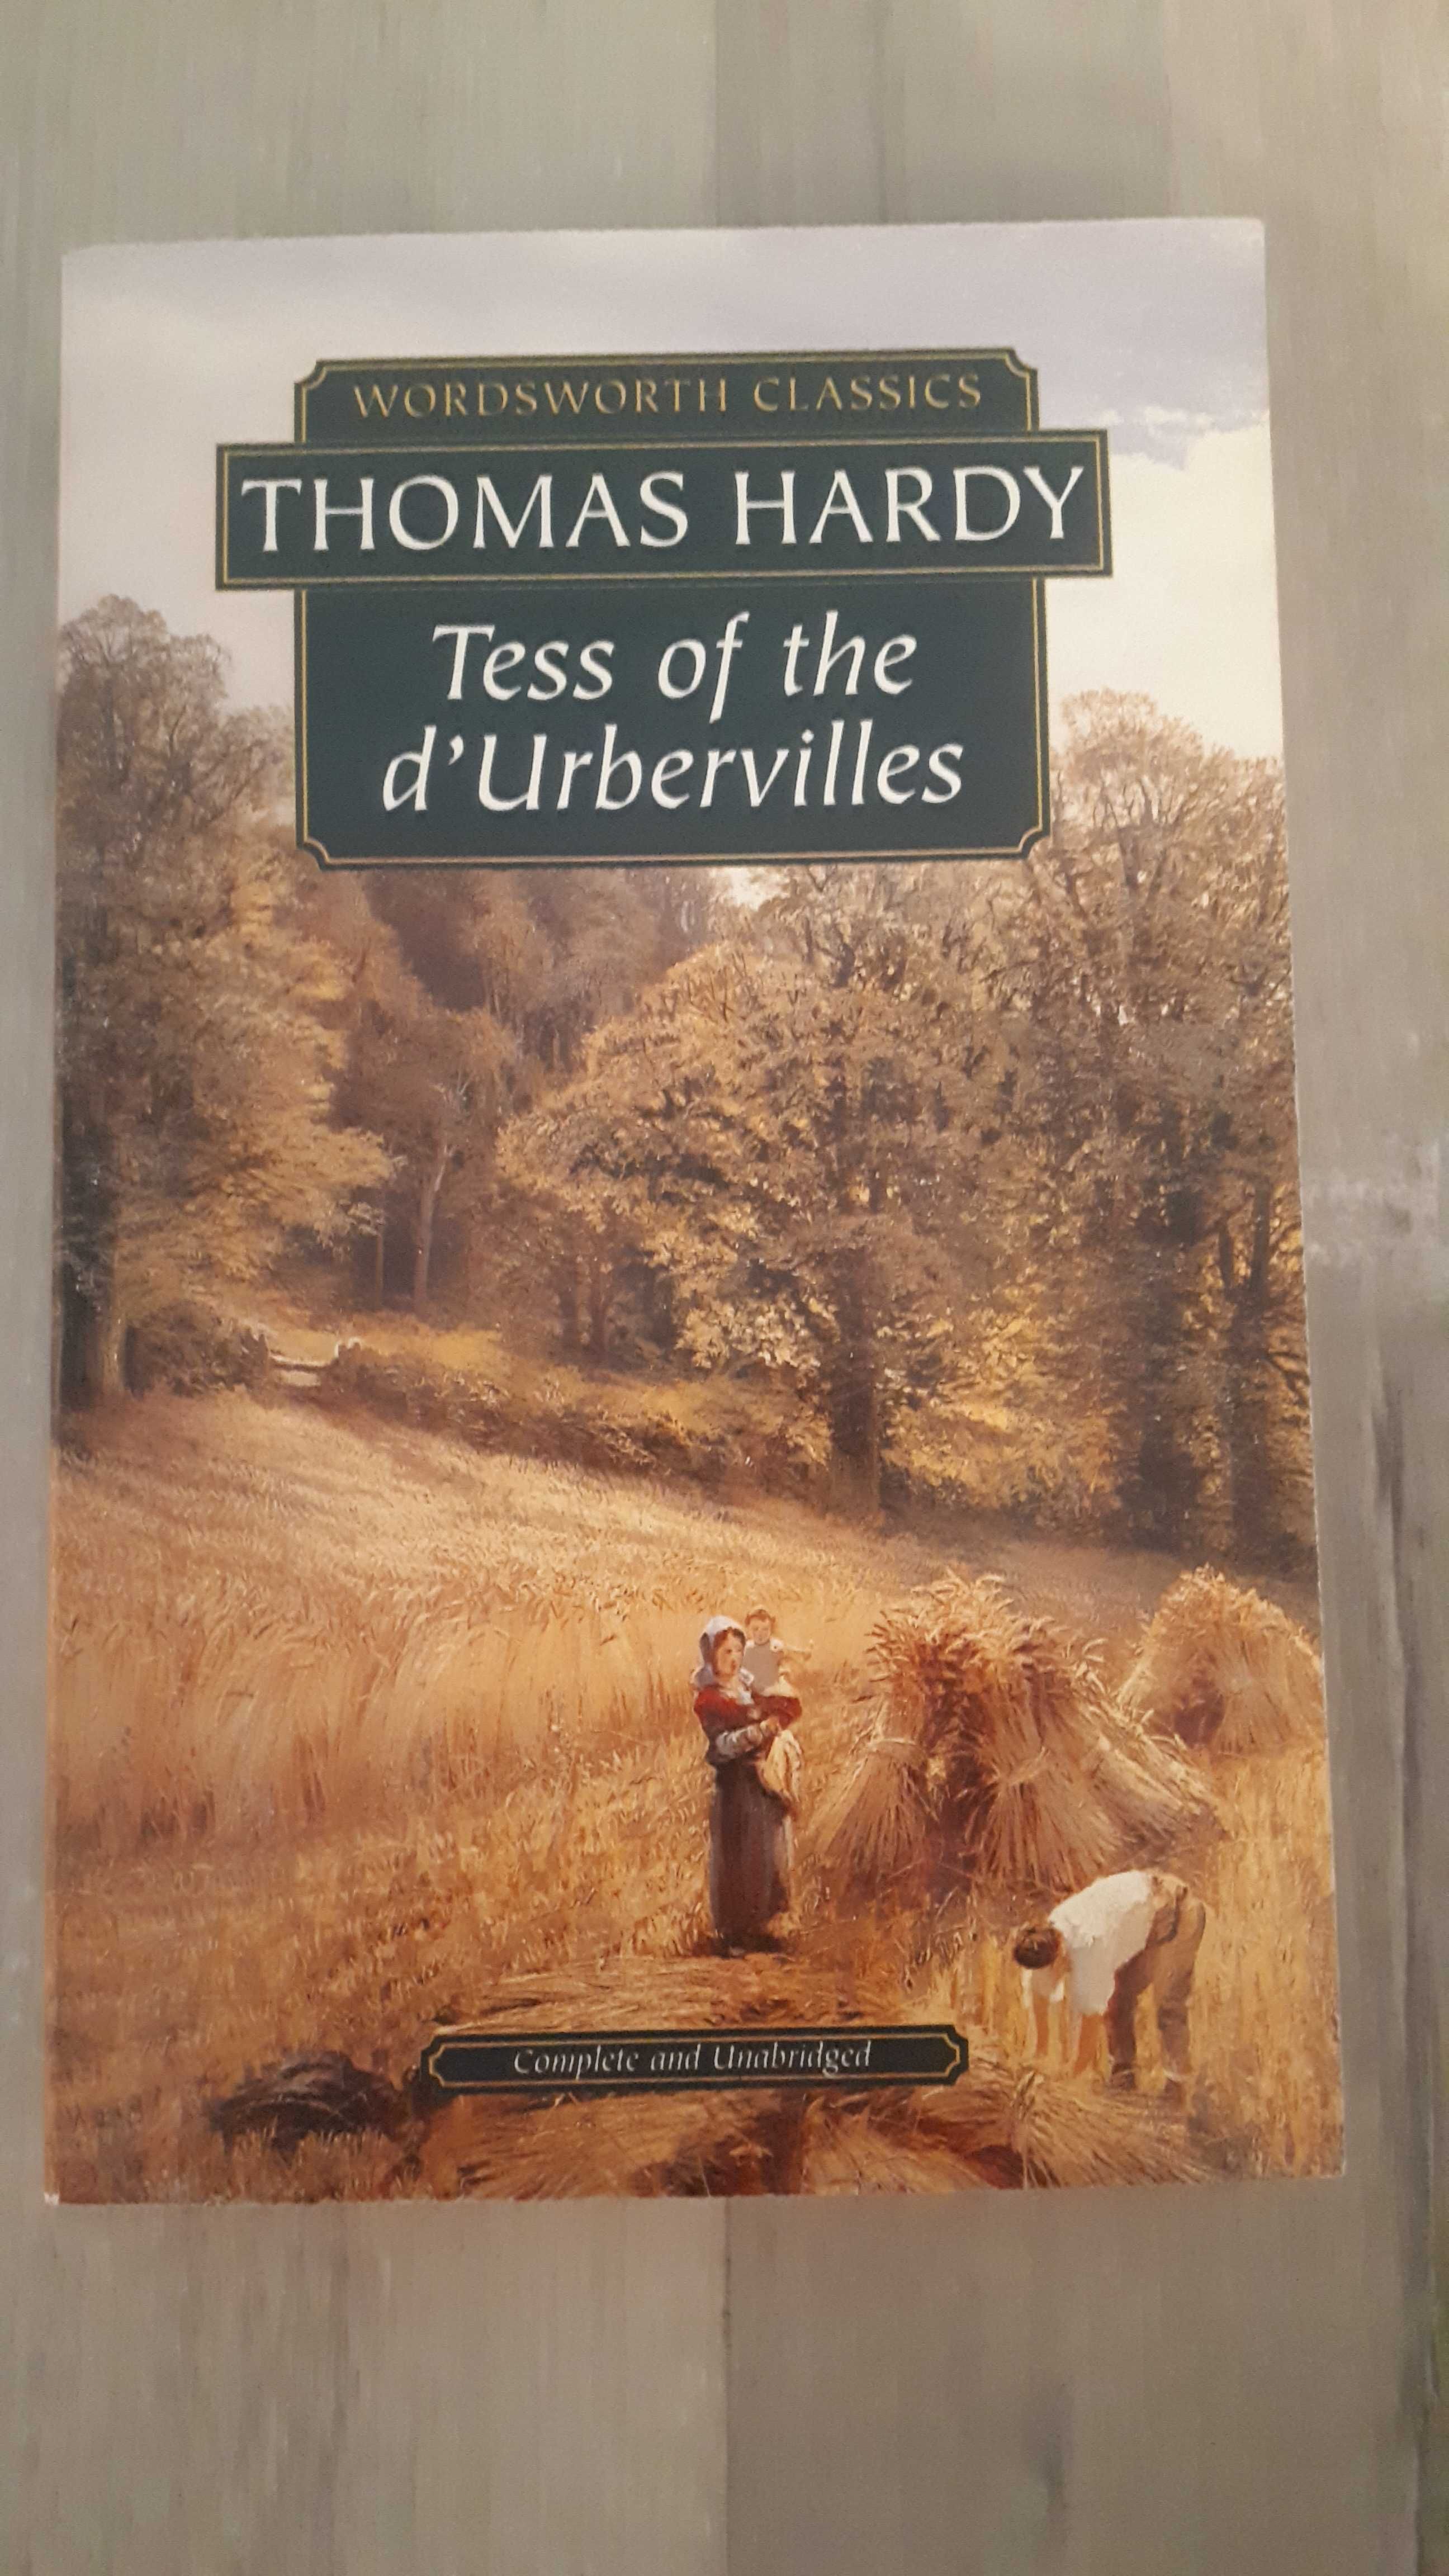 Sprzedam książkę T. Hardy Tess of the D'Urbervilles w oryginale